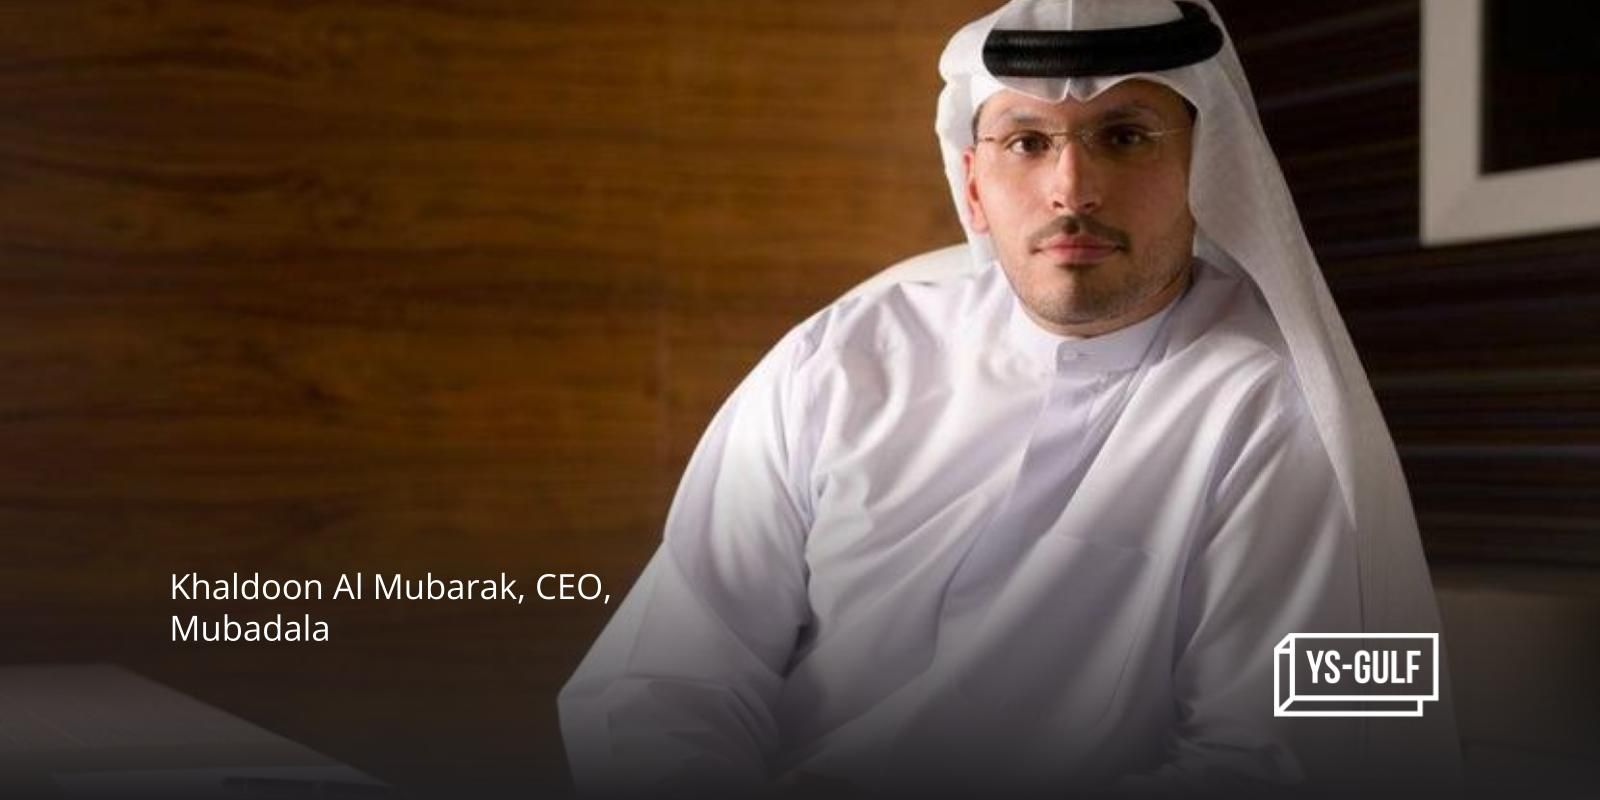 Abu Dhabi's Mubadala Takes Ownership in Gold Firm AUX - WSJ